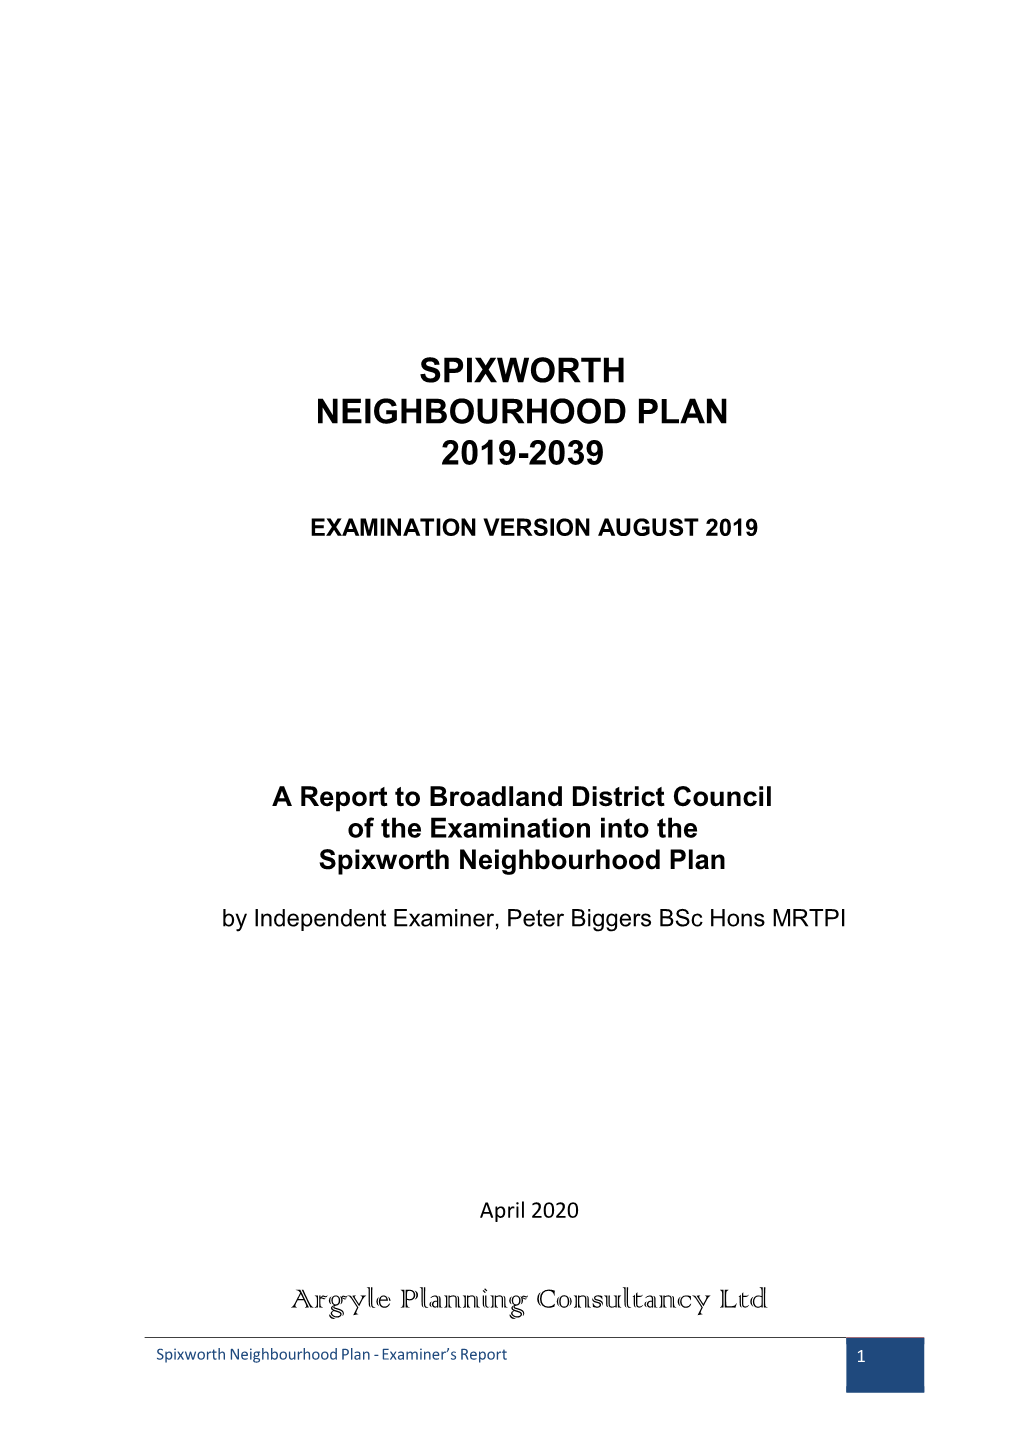 Spixworth Neighbourhood Plan Examination Report